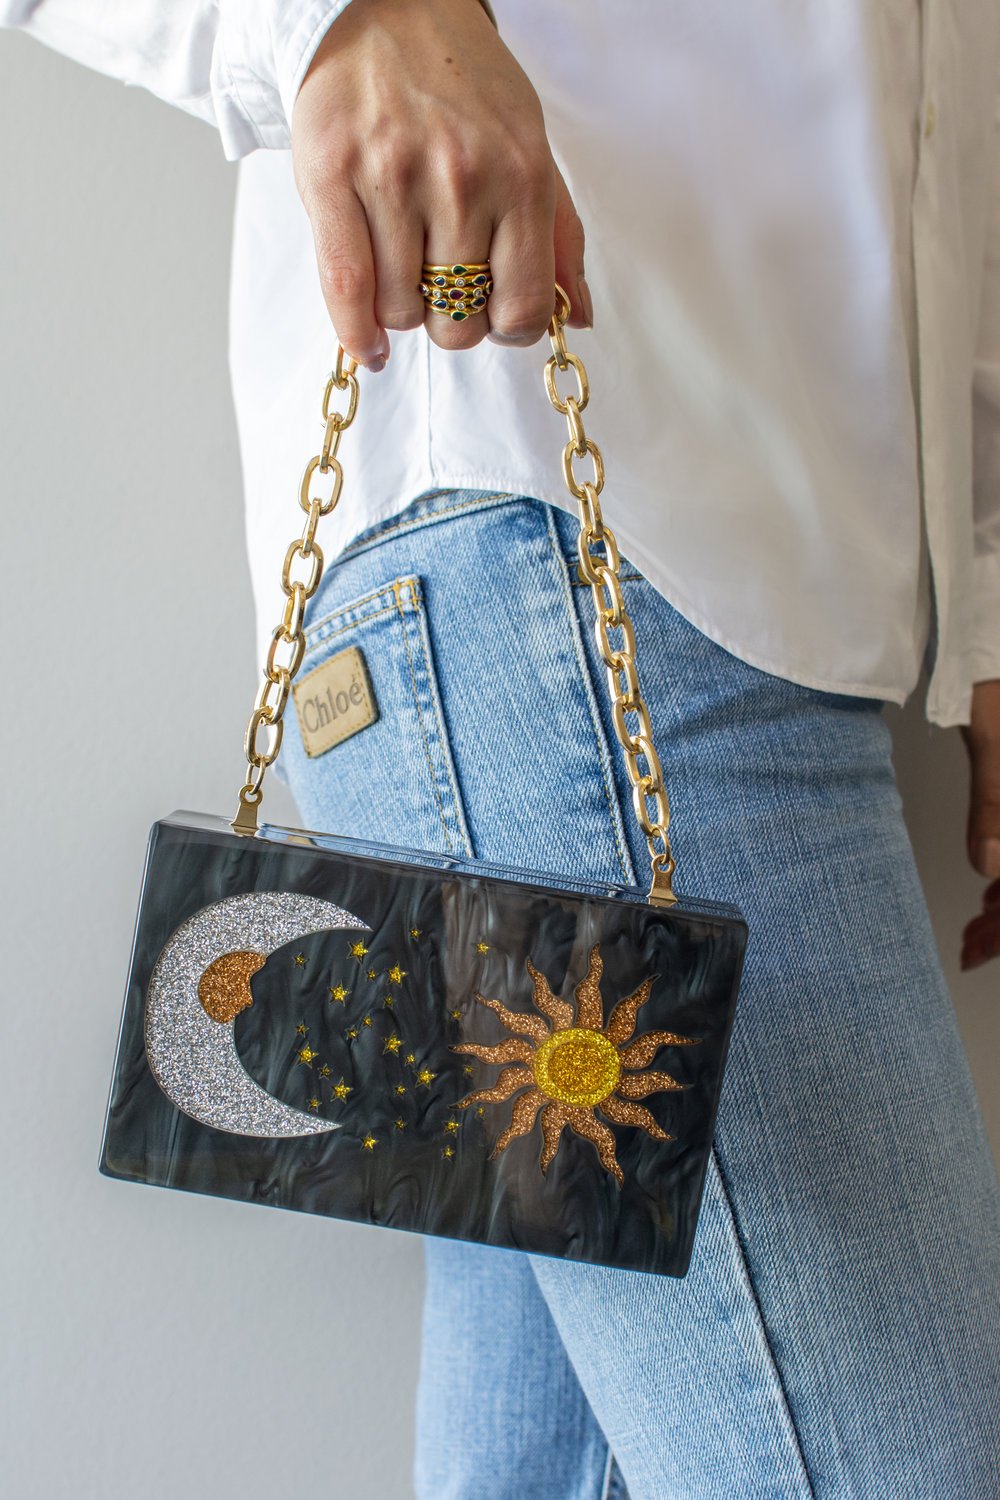 The Galaxy Handbag